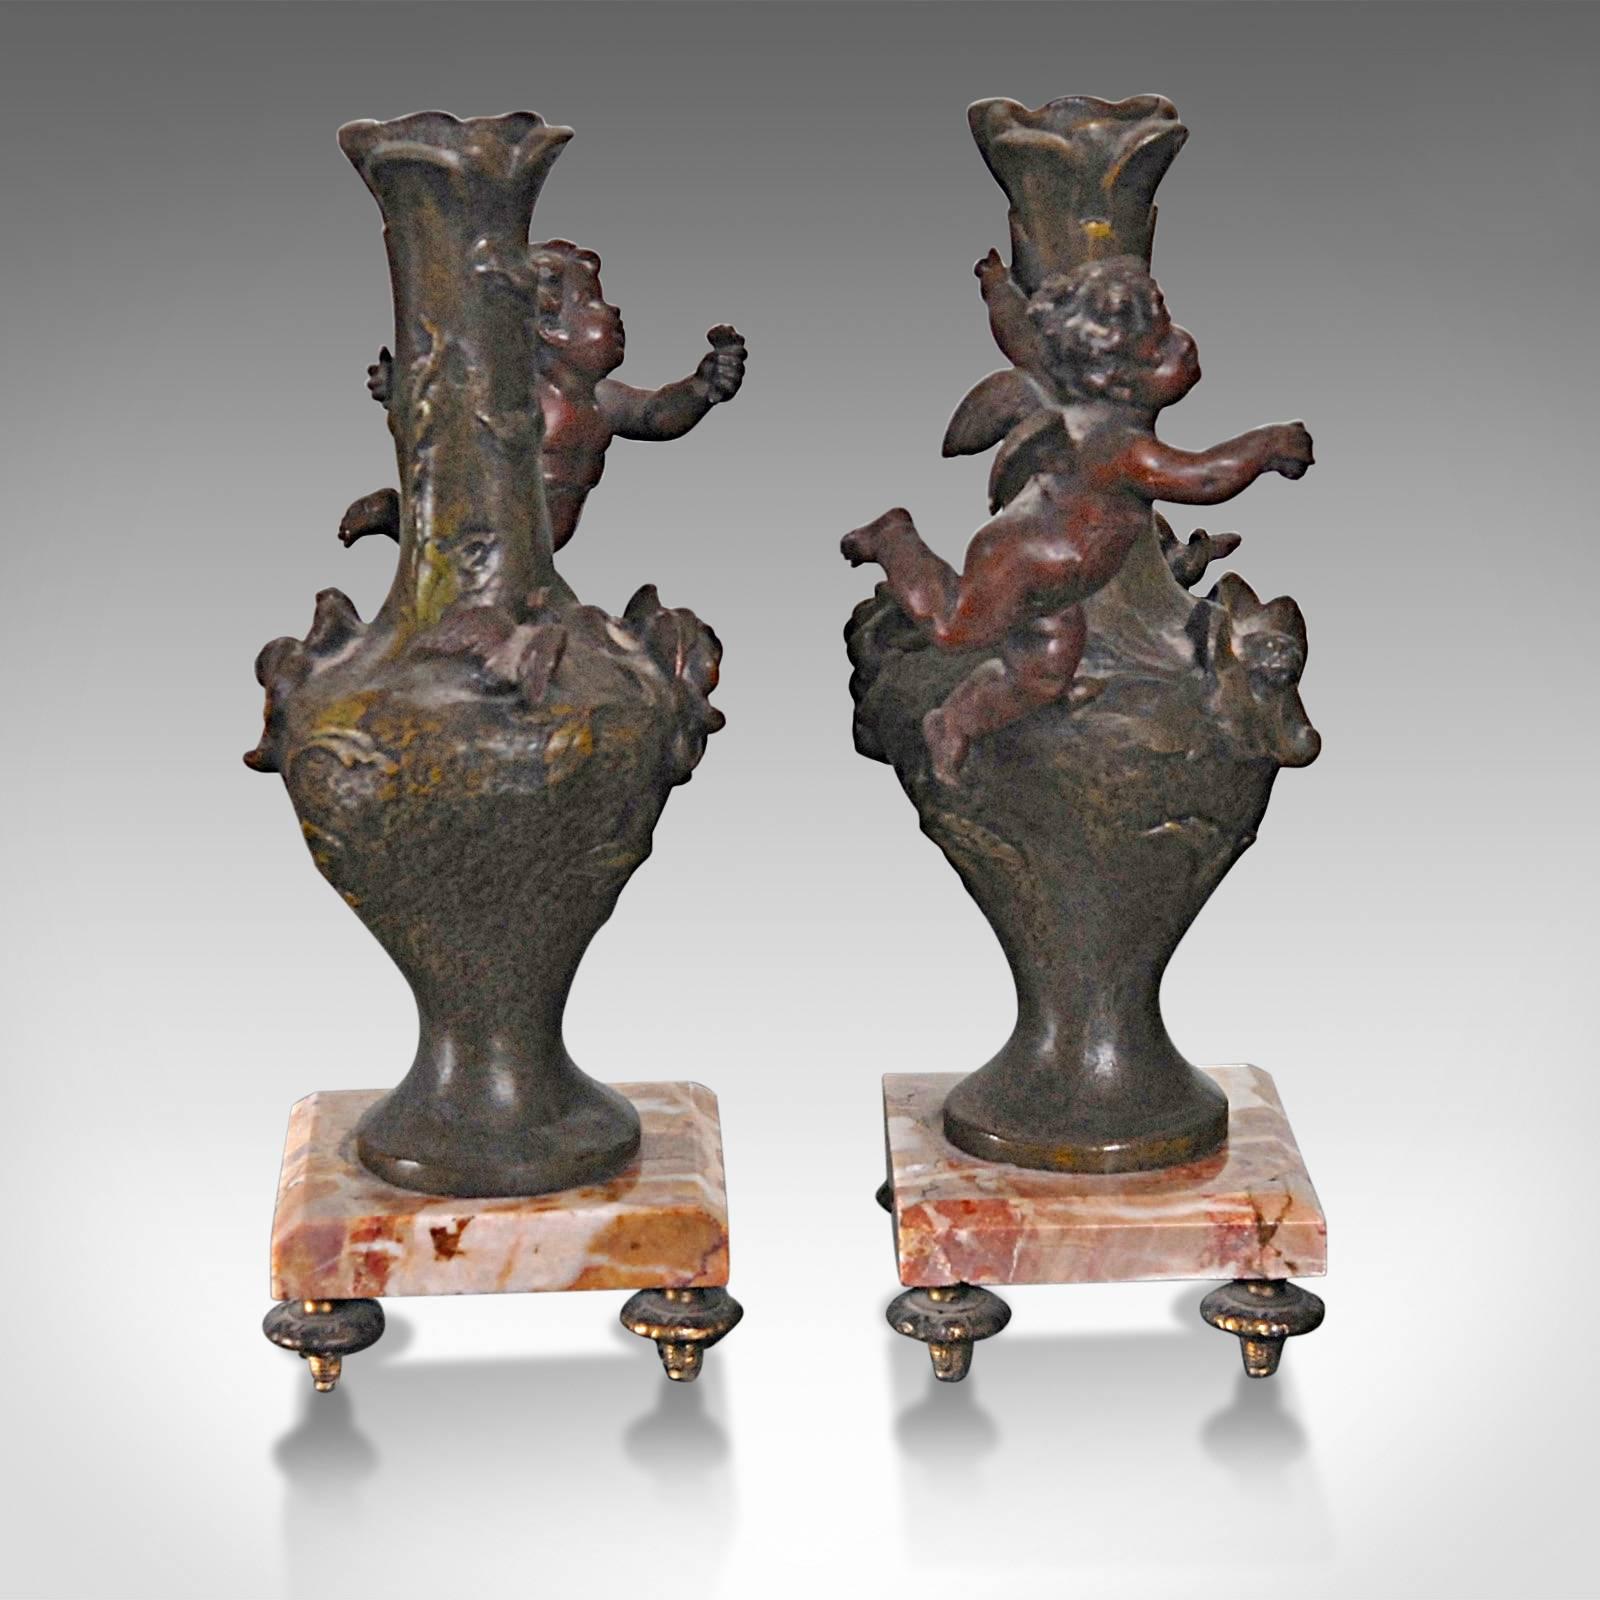 Neoclassical Revival Antique Pair of Candlesticks Vases, Victorian, circa 1870